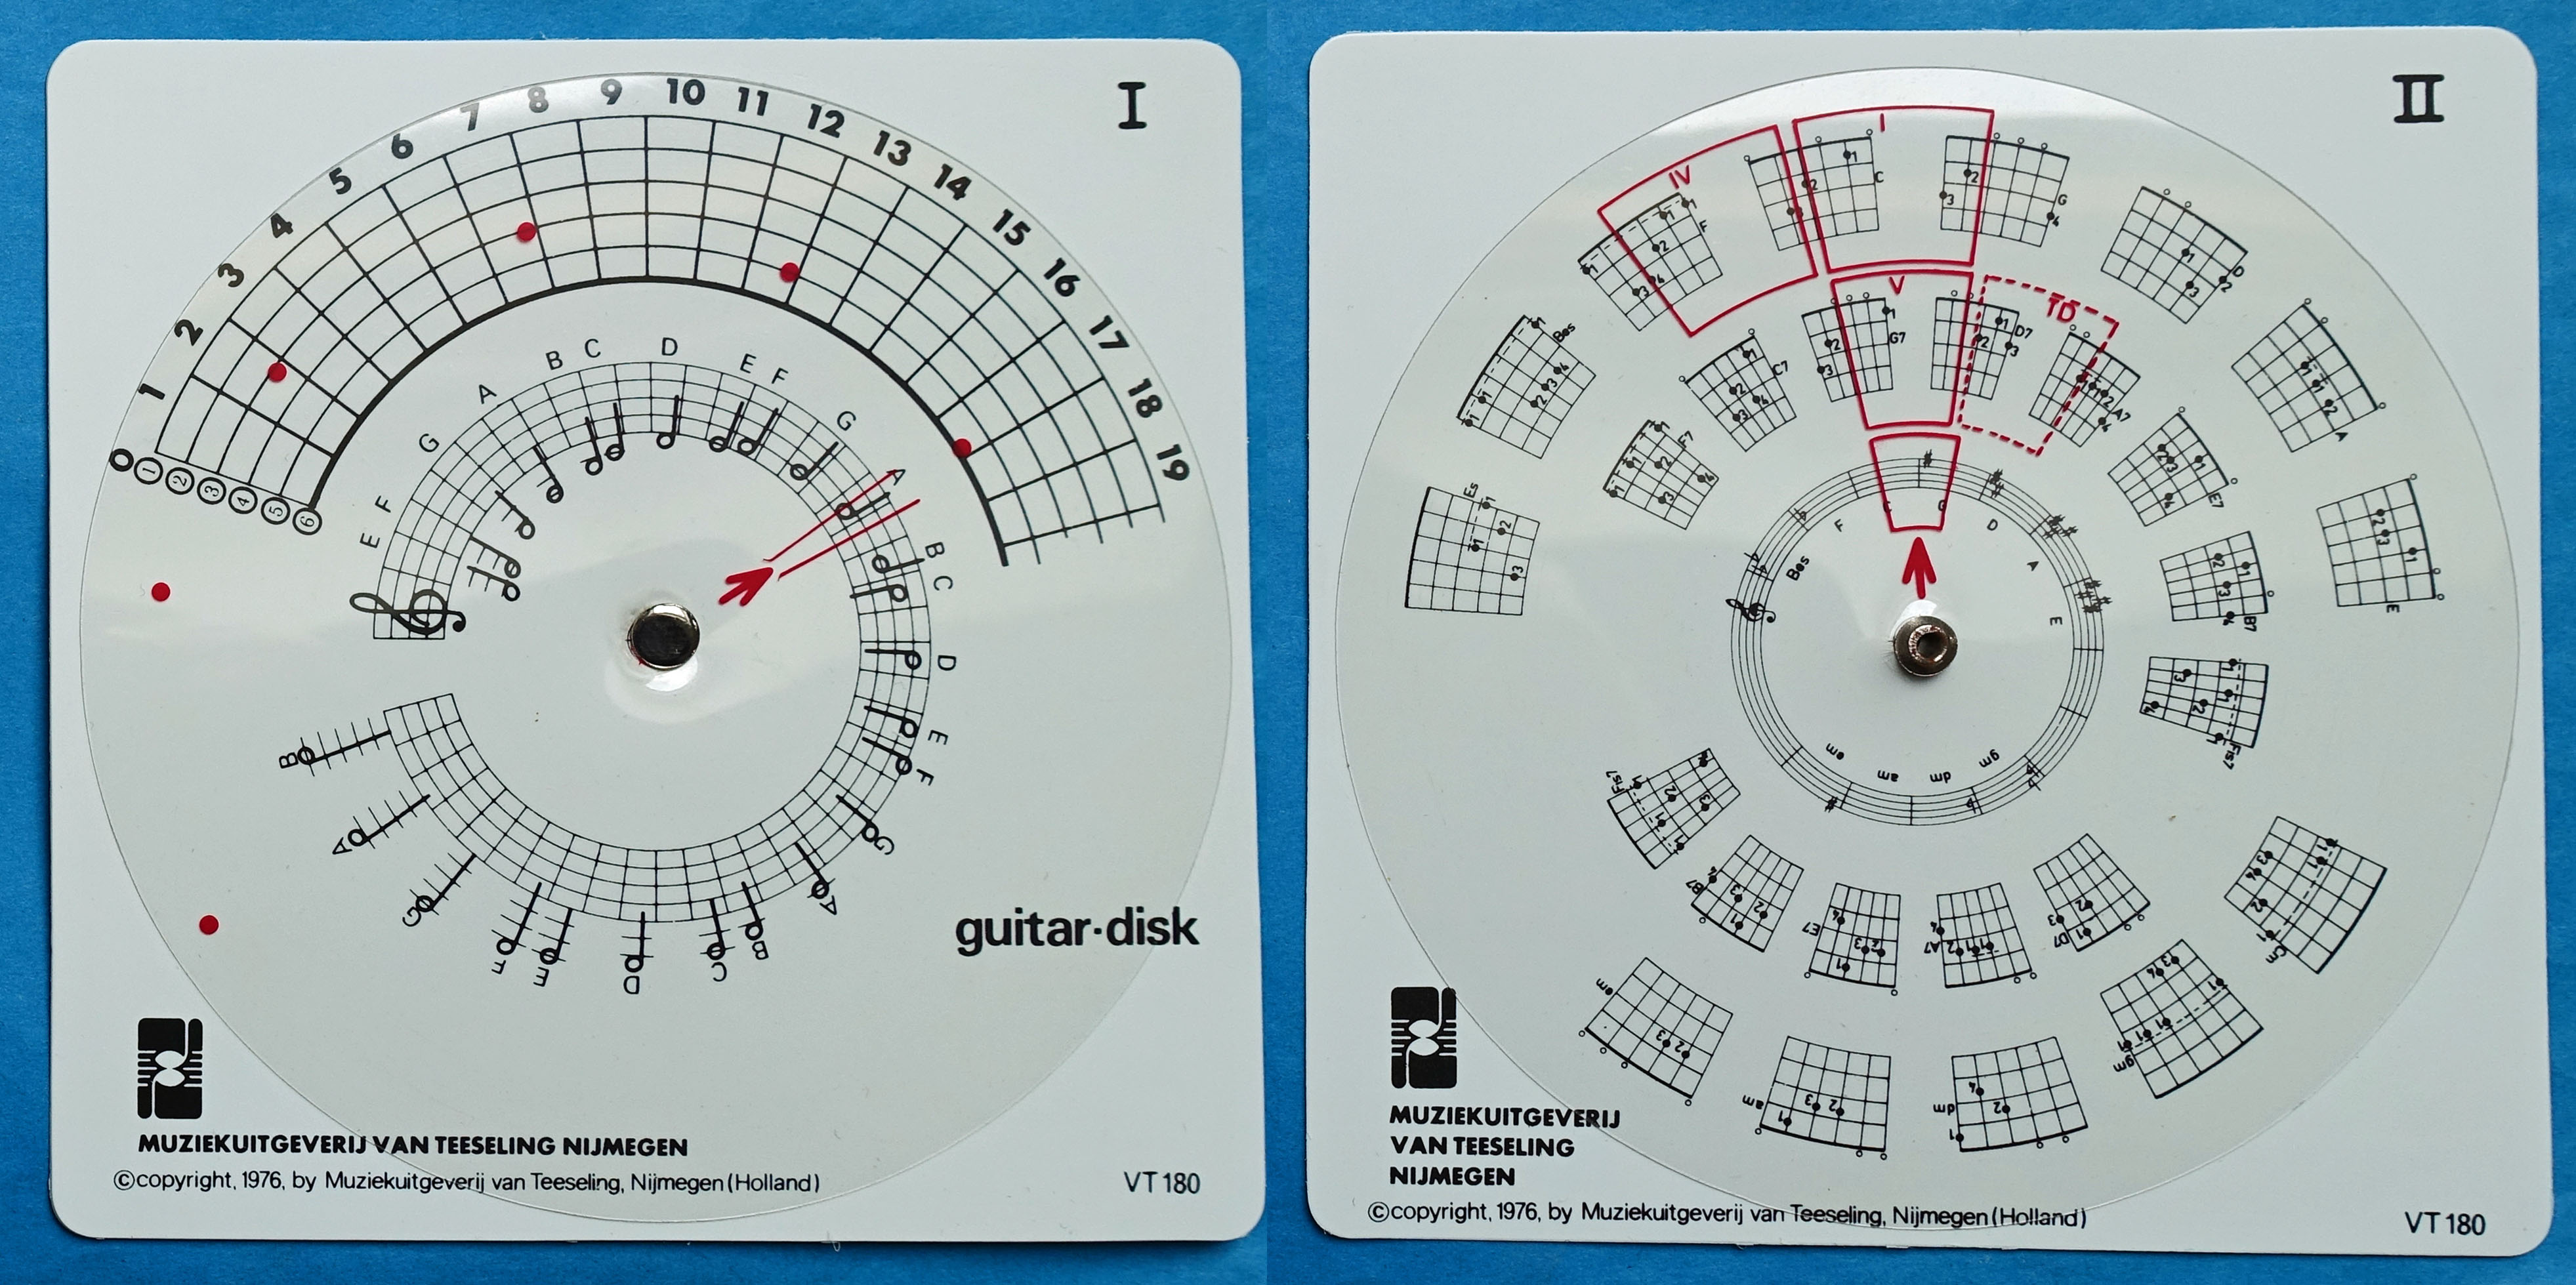 Muziekuitgeverij van Teeseling VT180 Guitar-Disk Music Guitar Composition